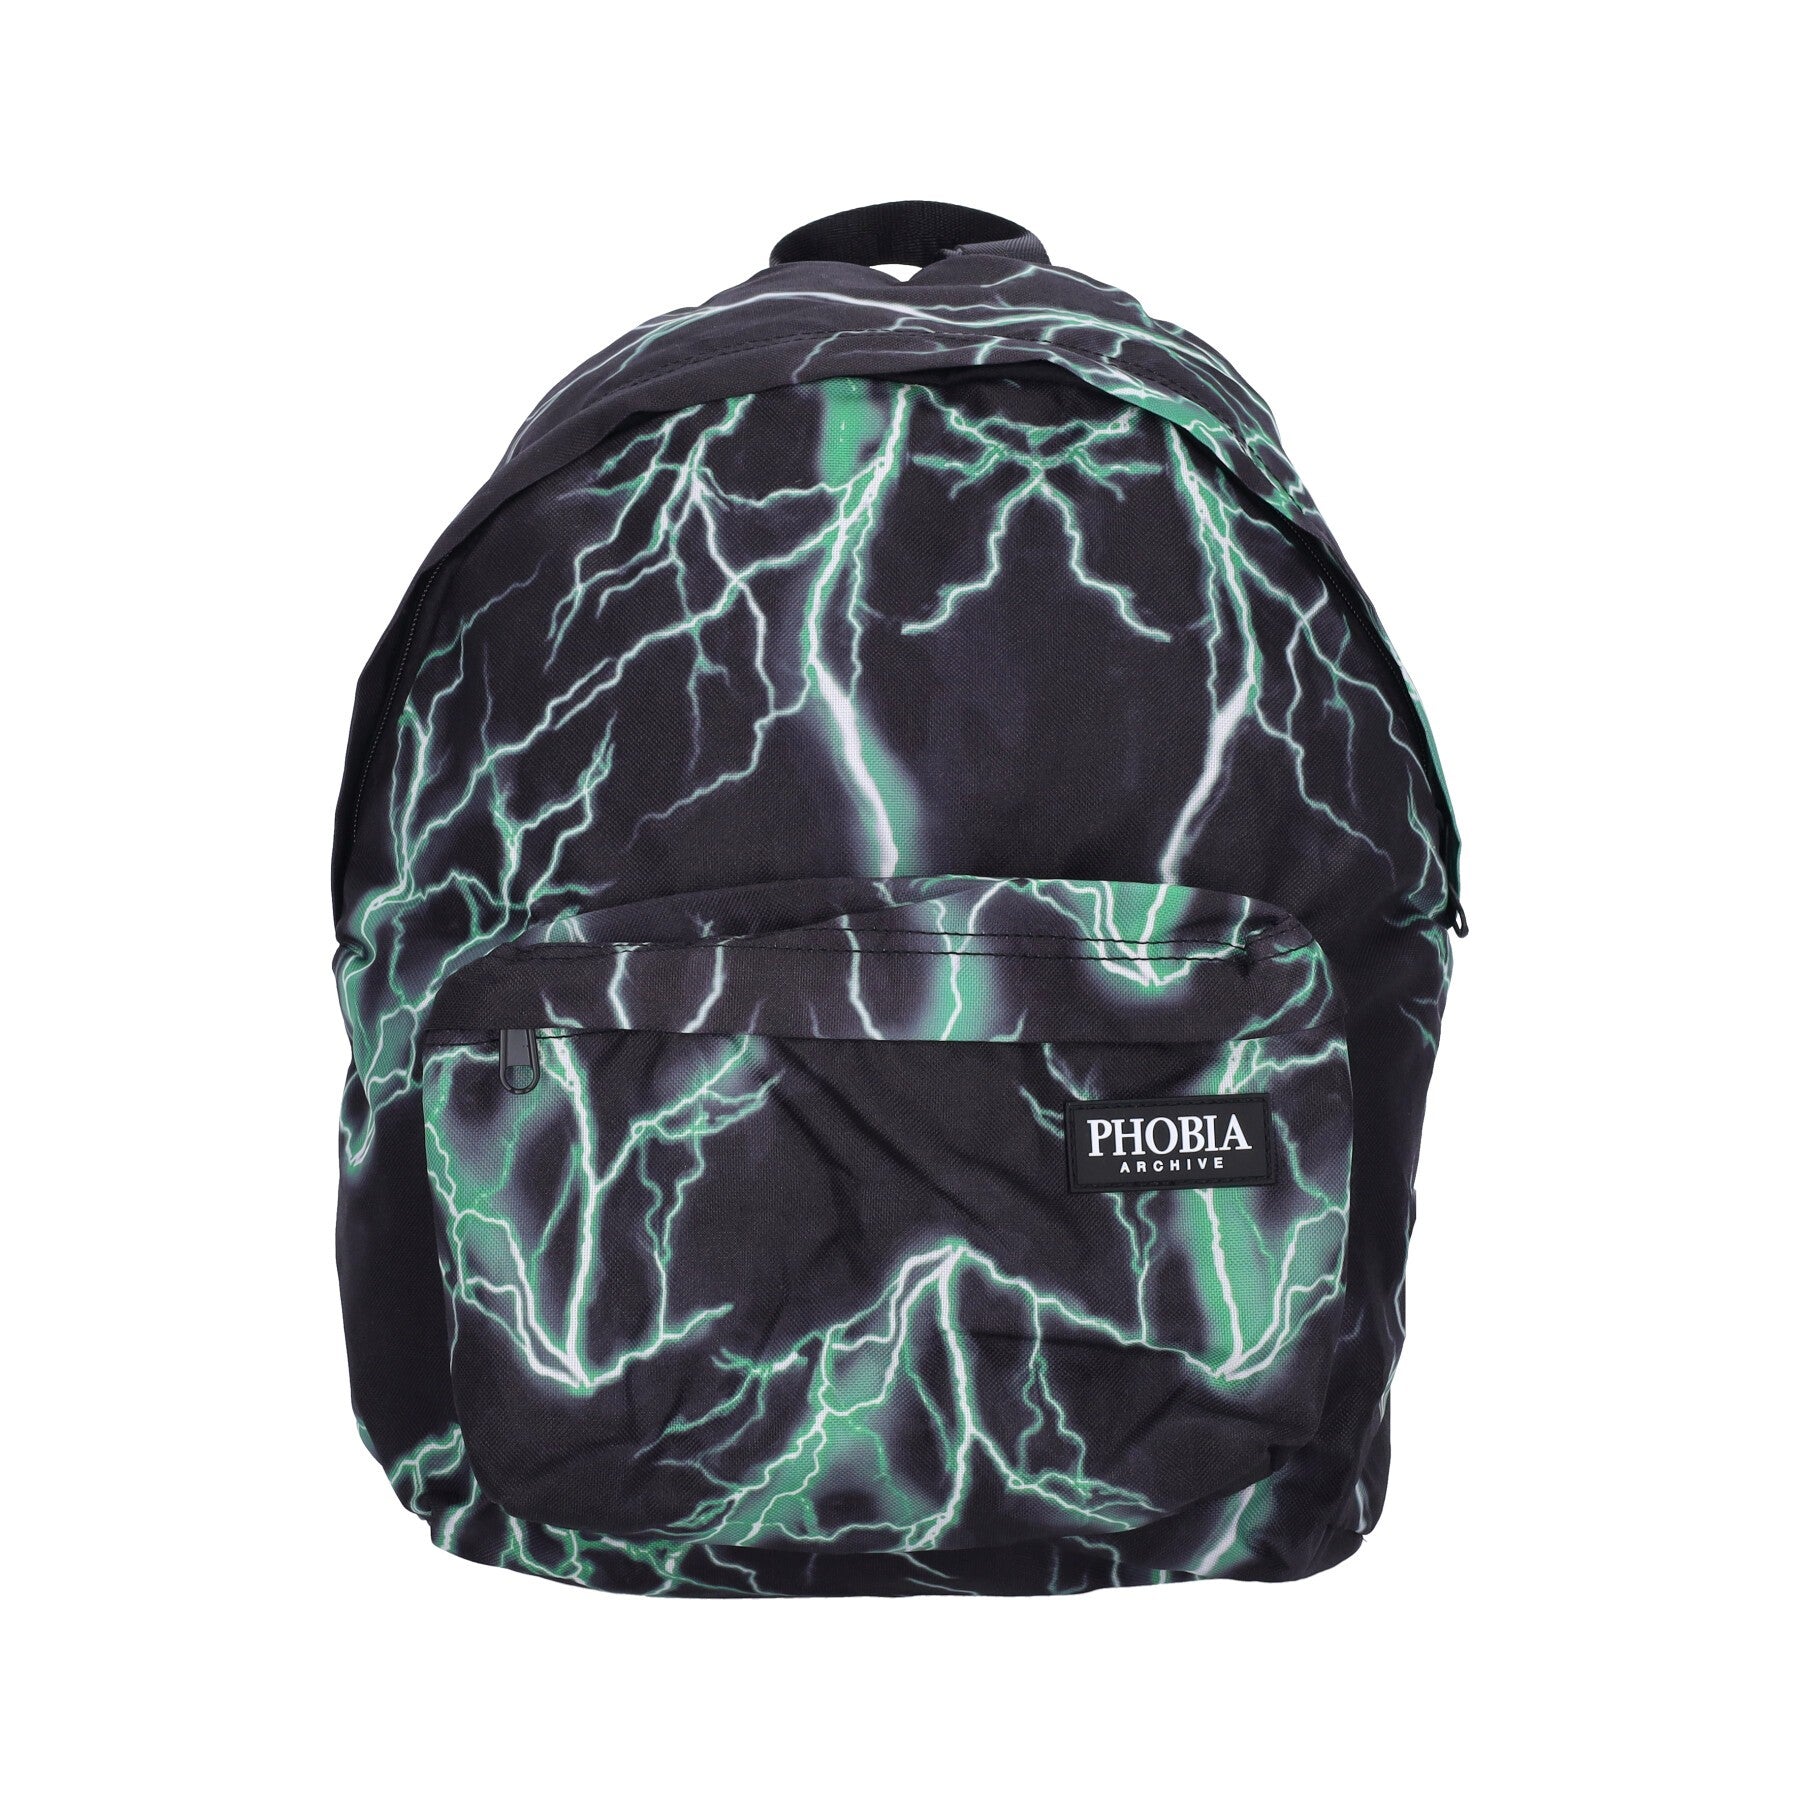 Phobia, Zaino Uomo Lightning Backpack, Black/green